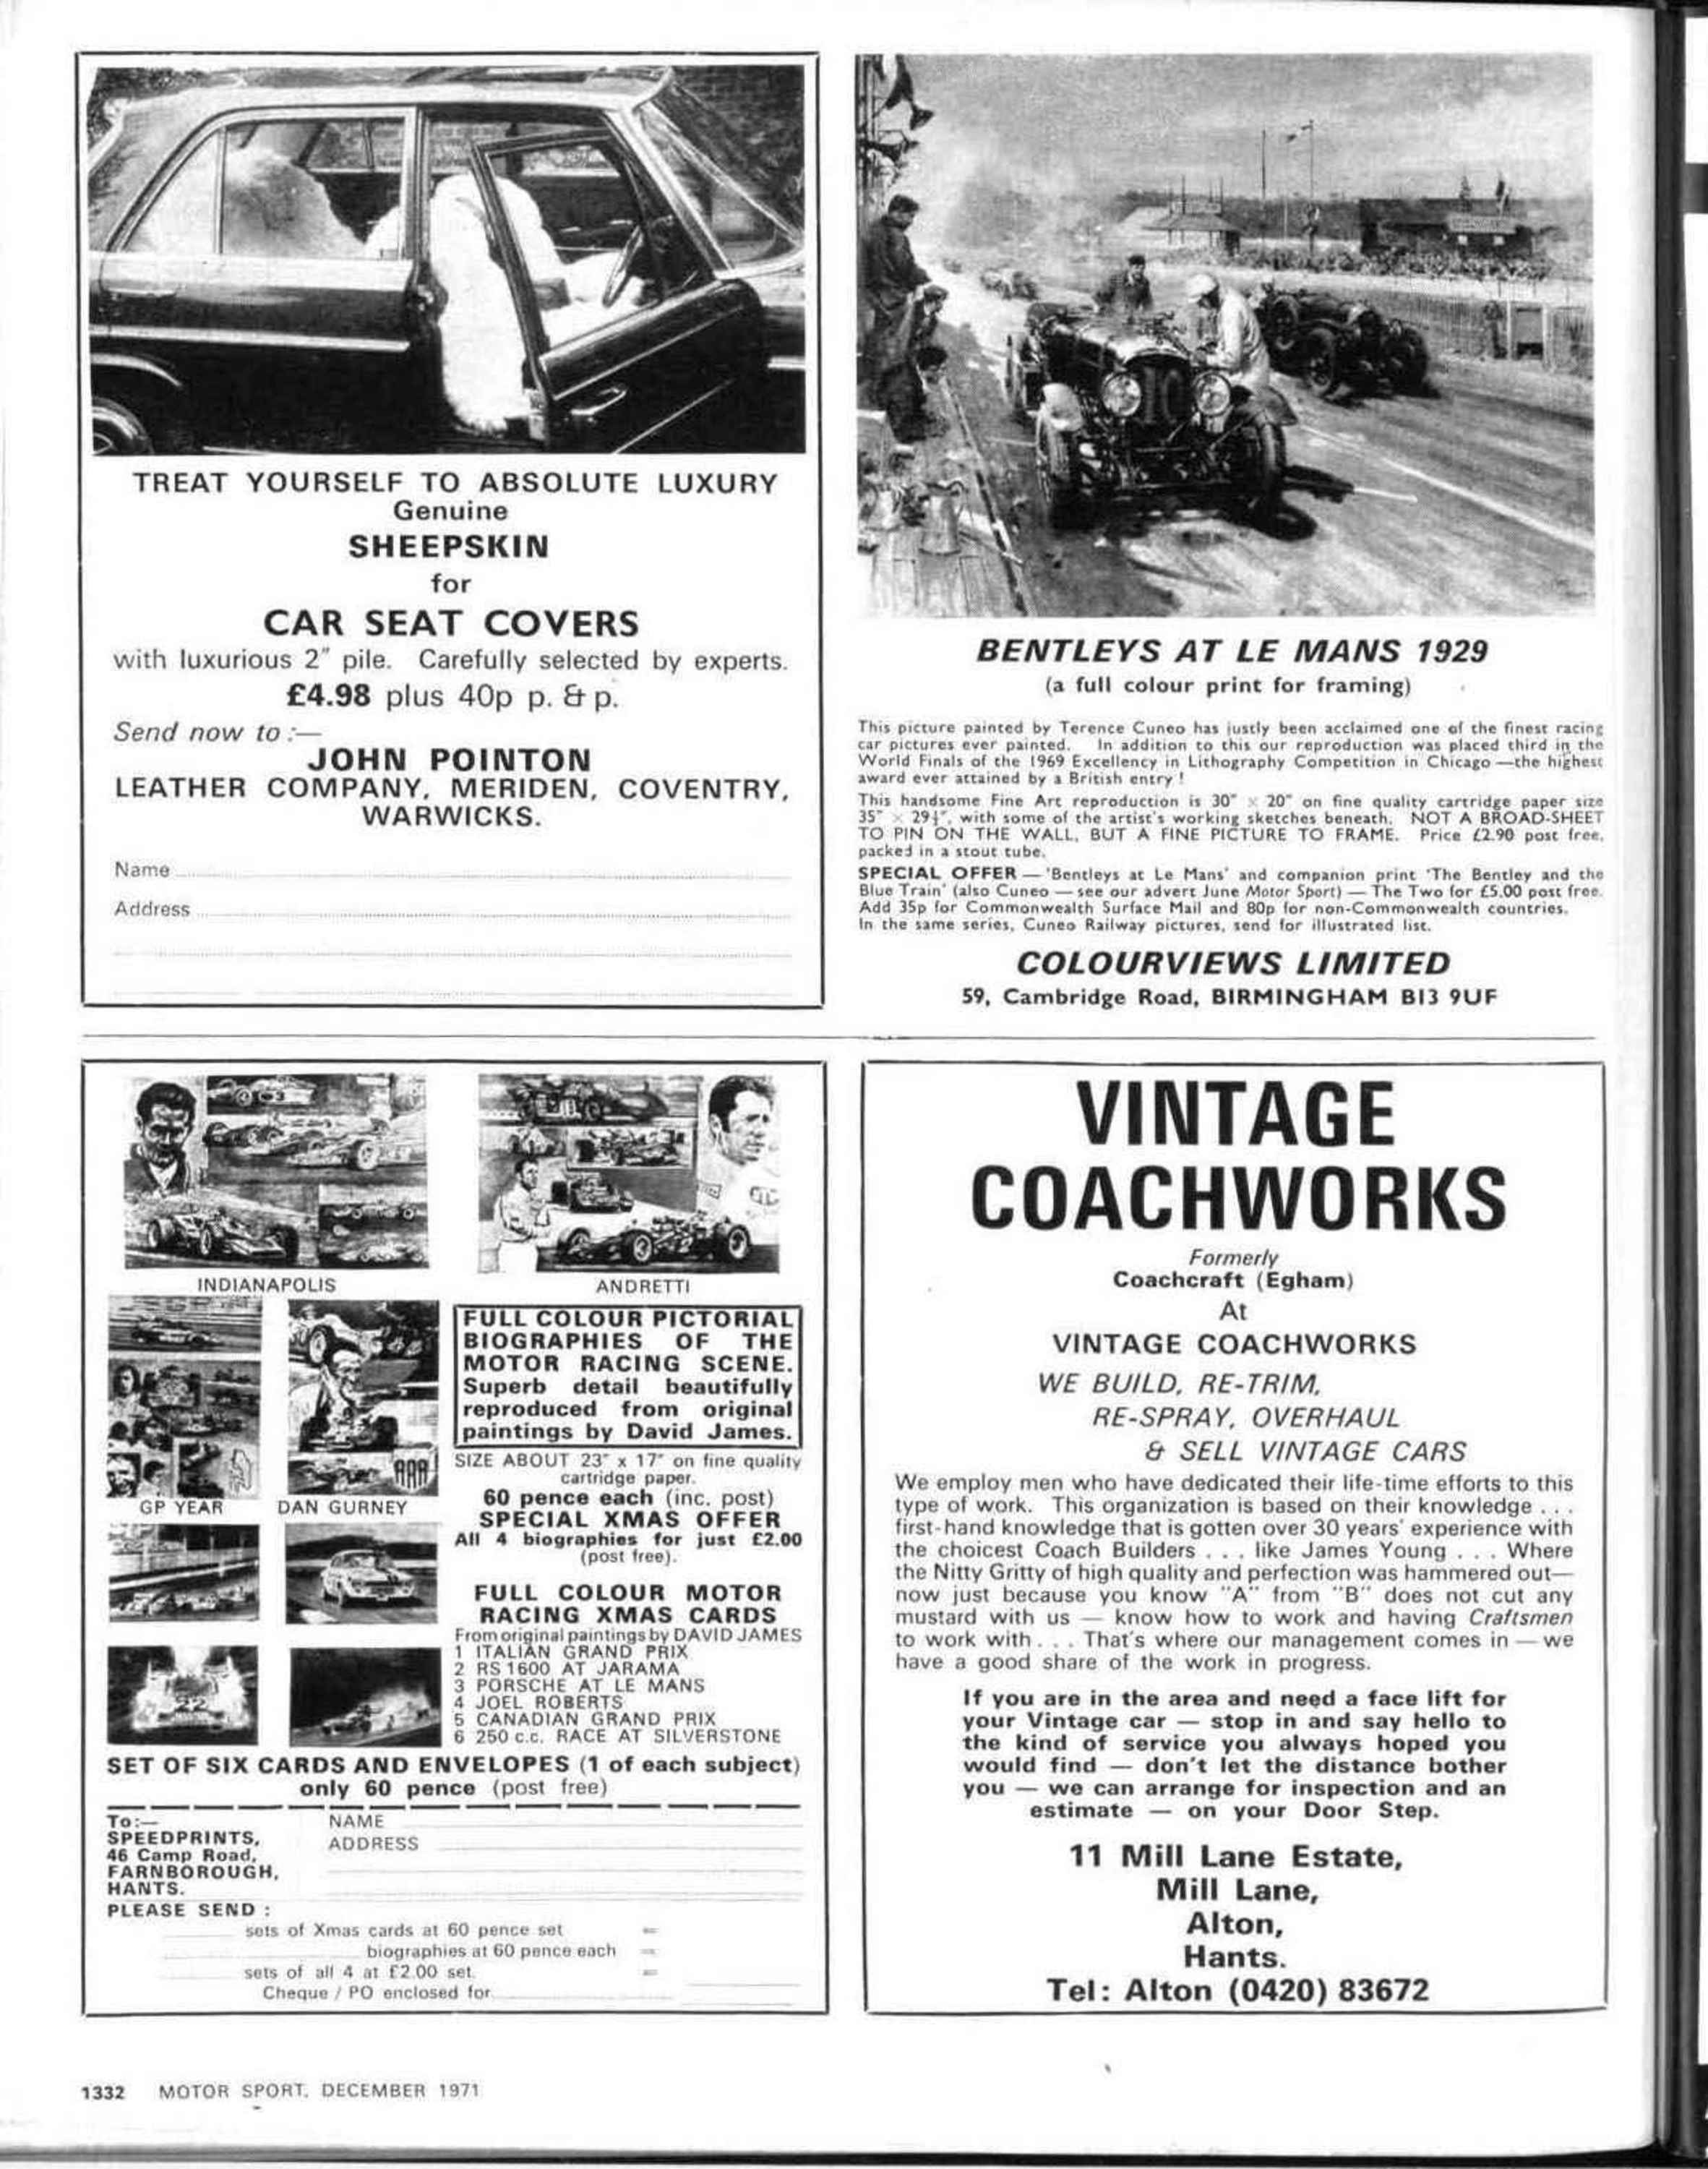 The Triumph TR Register December 1971 - Motor Sport Magazine